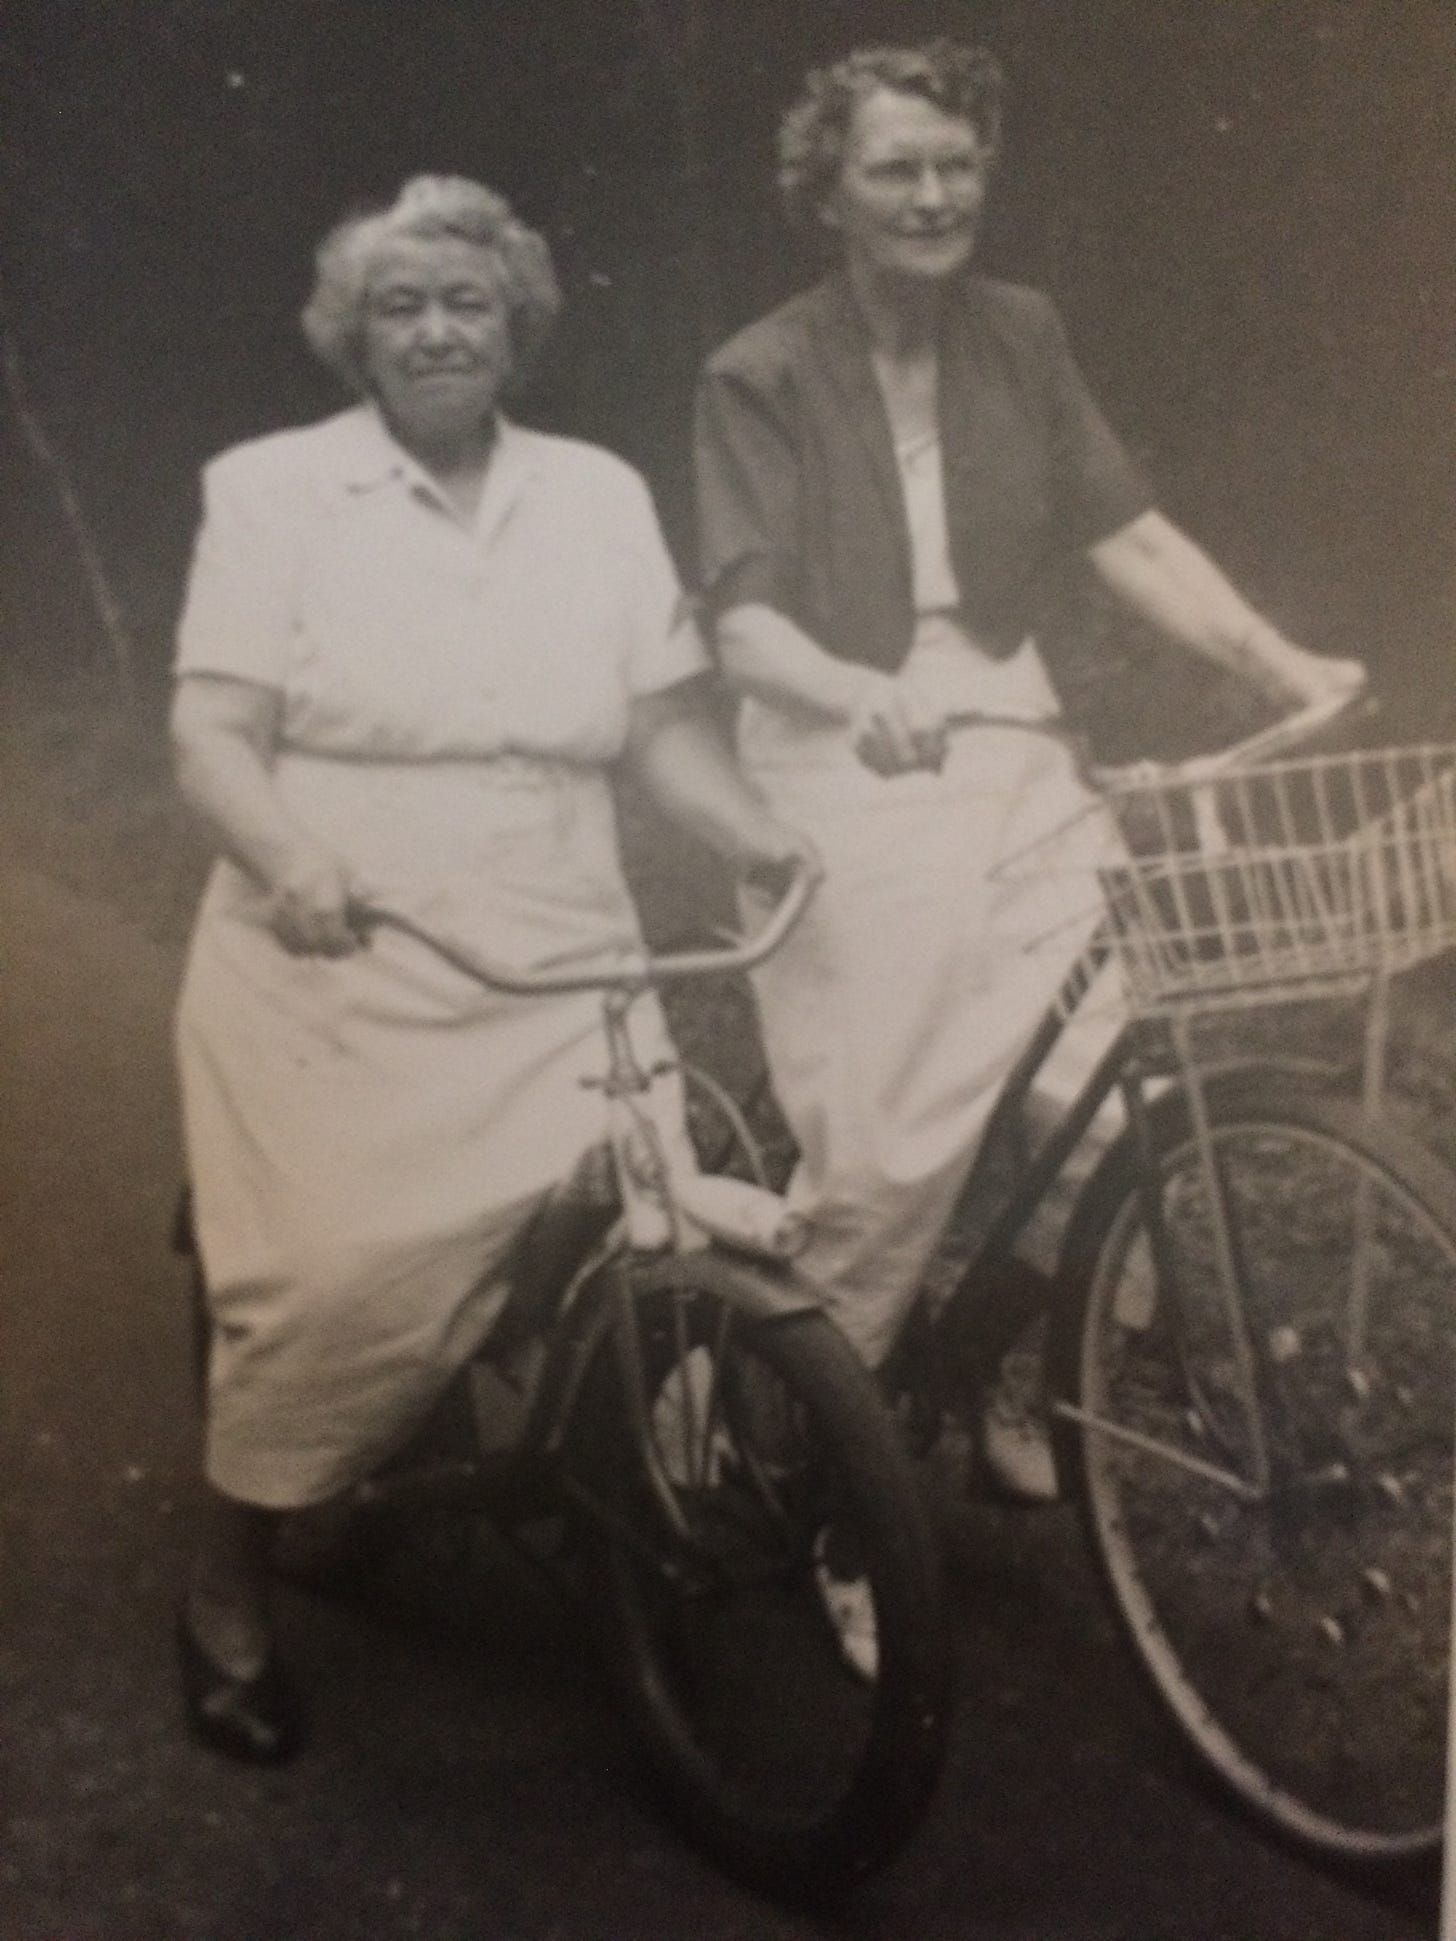 Black and white photo of two women on bikes